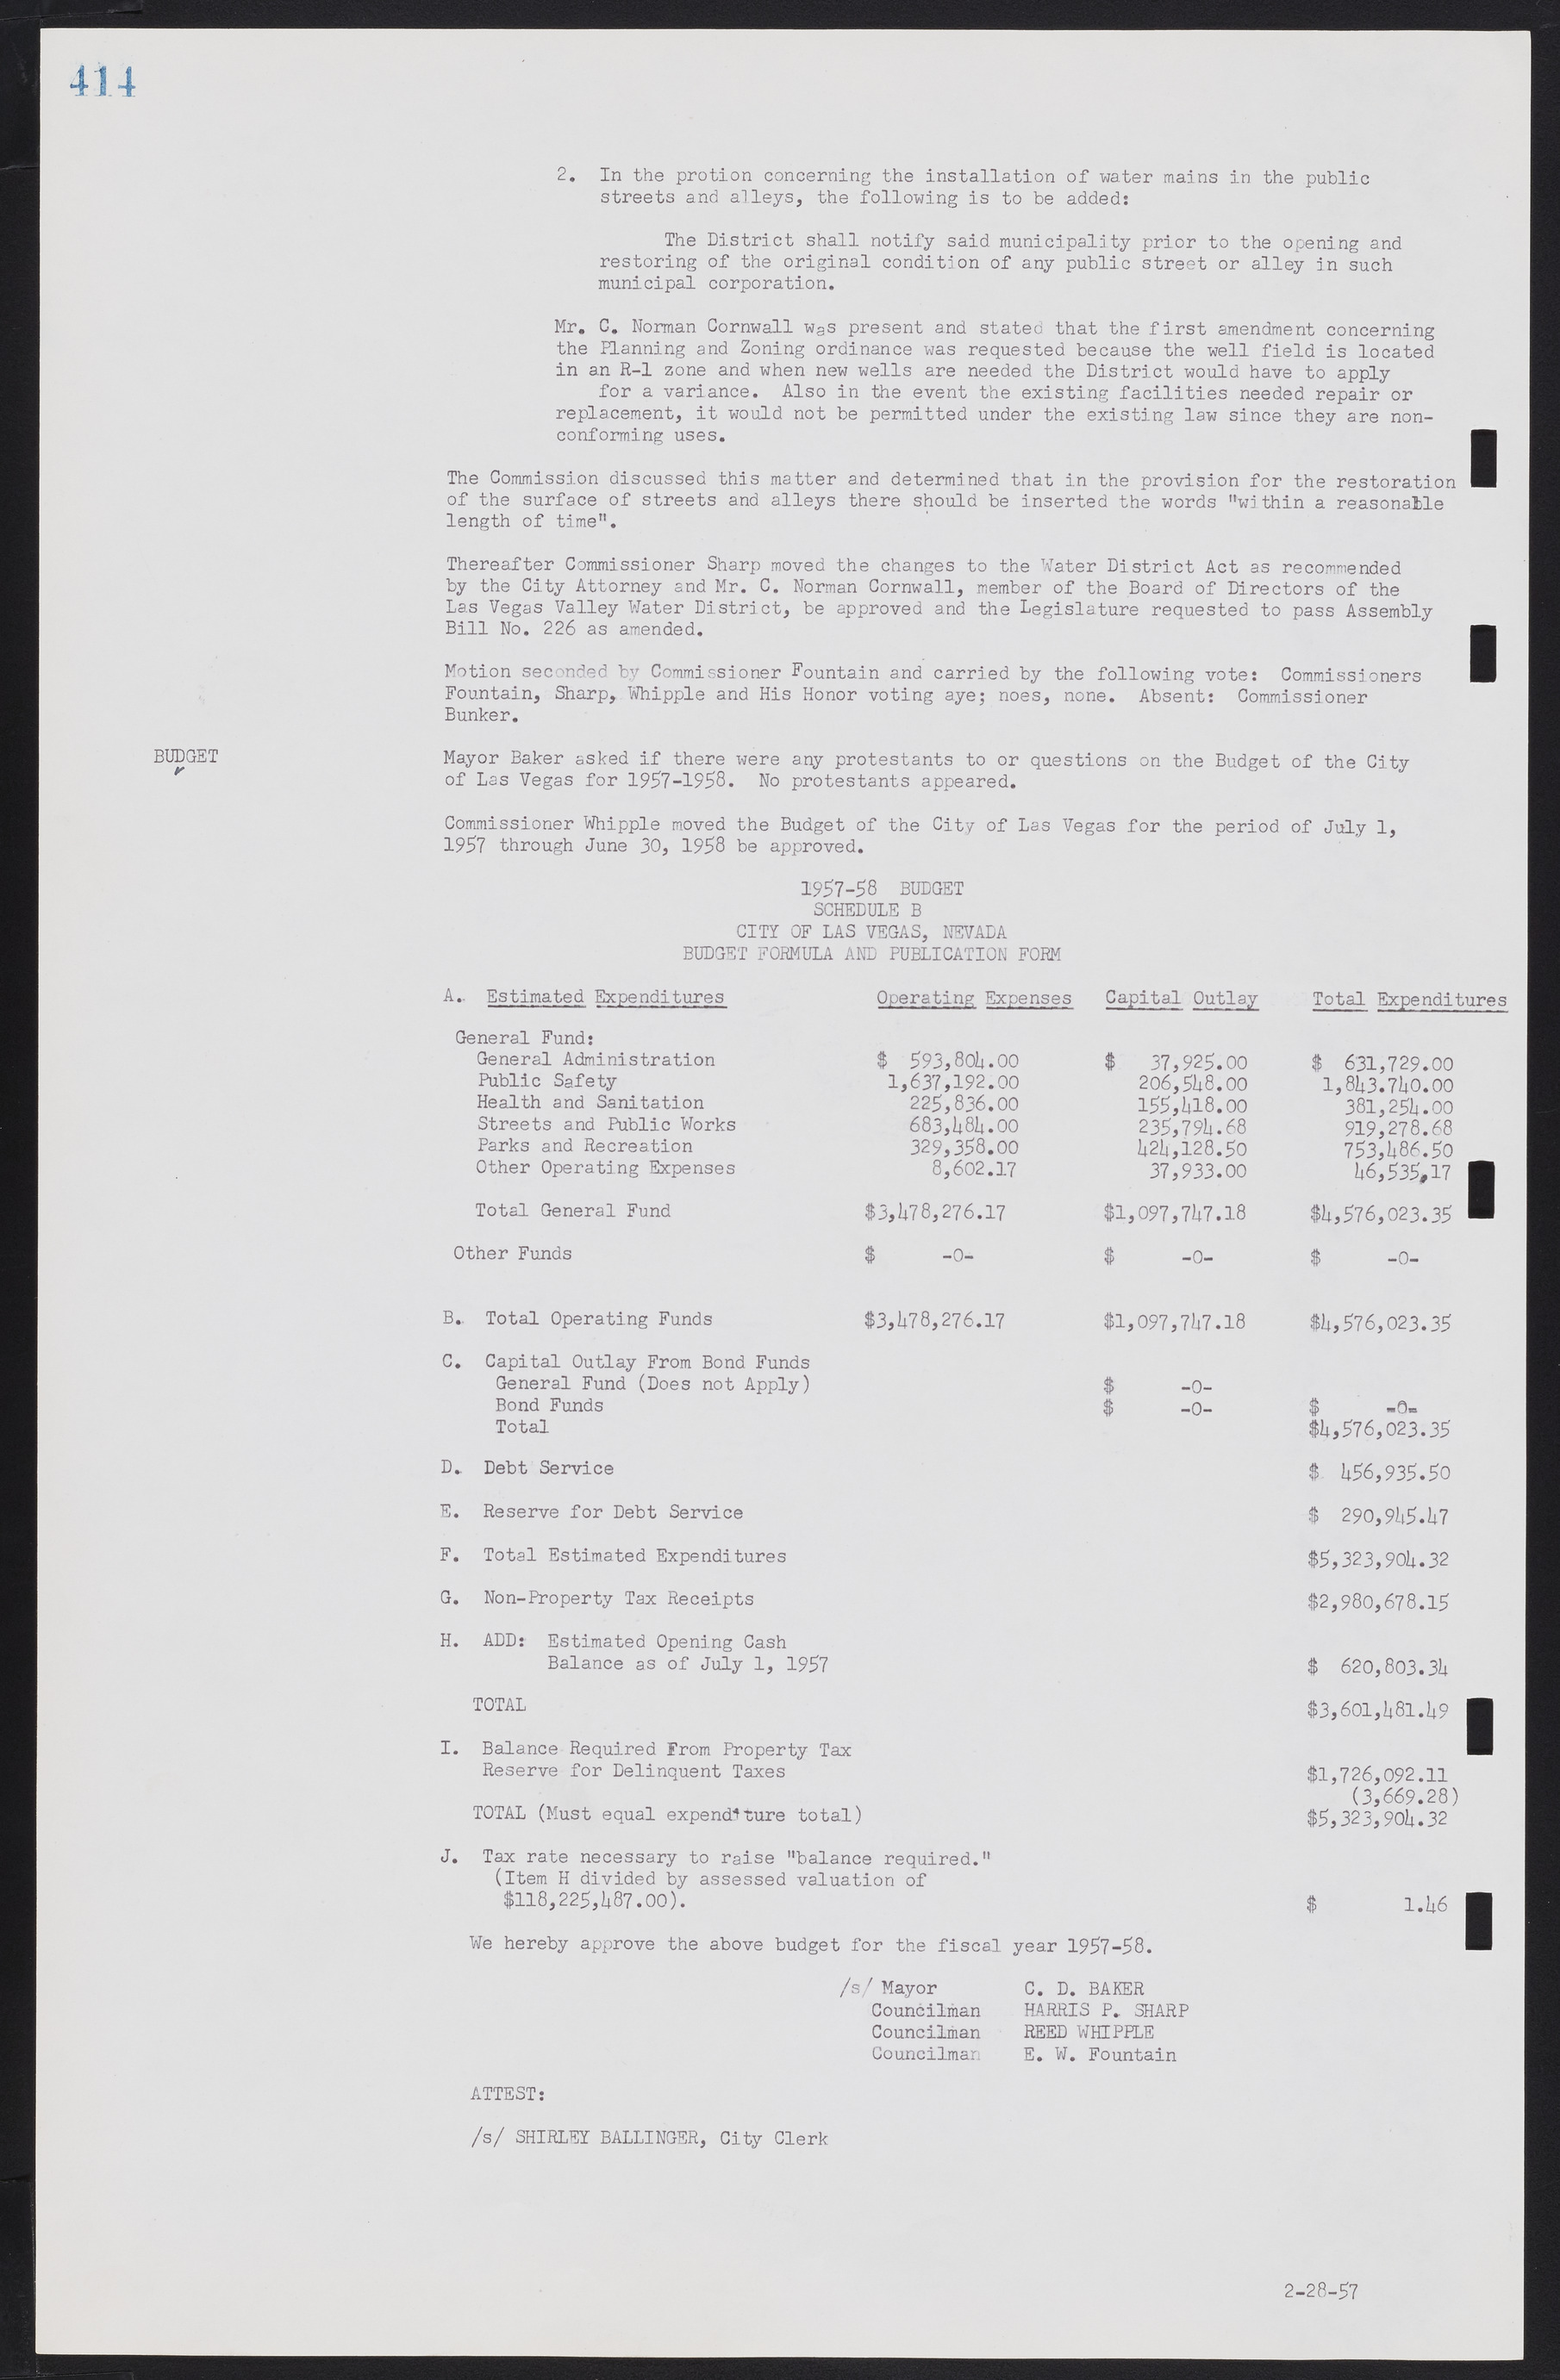 Las Vegas City Commission Minutes, September 21, 1955 to November 20, 1957, lvc000010-434